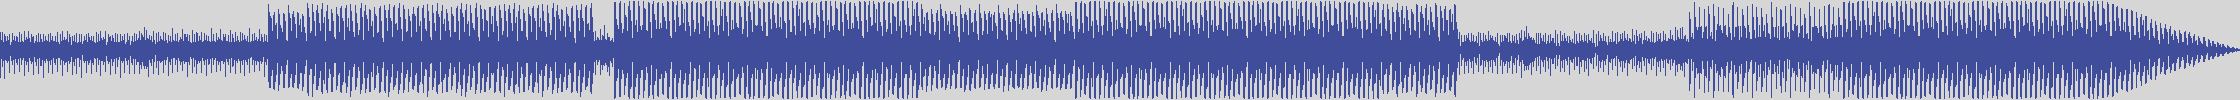 nf_boyz_records [NFY015] Zac Brothers - Stamp [Tribal Mix] audio wave form